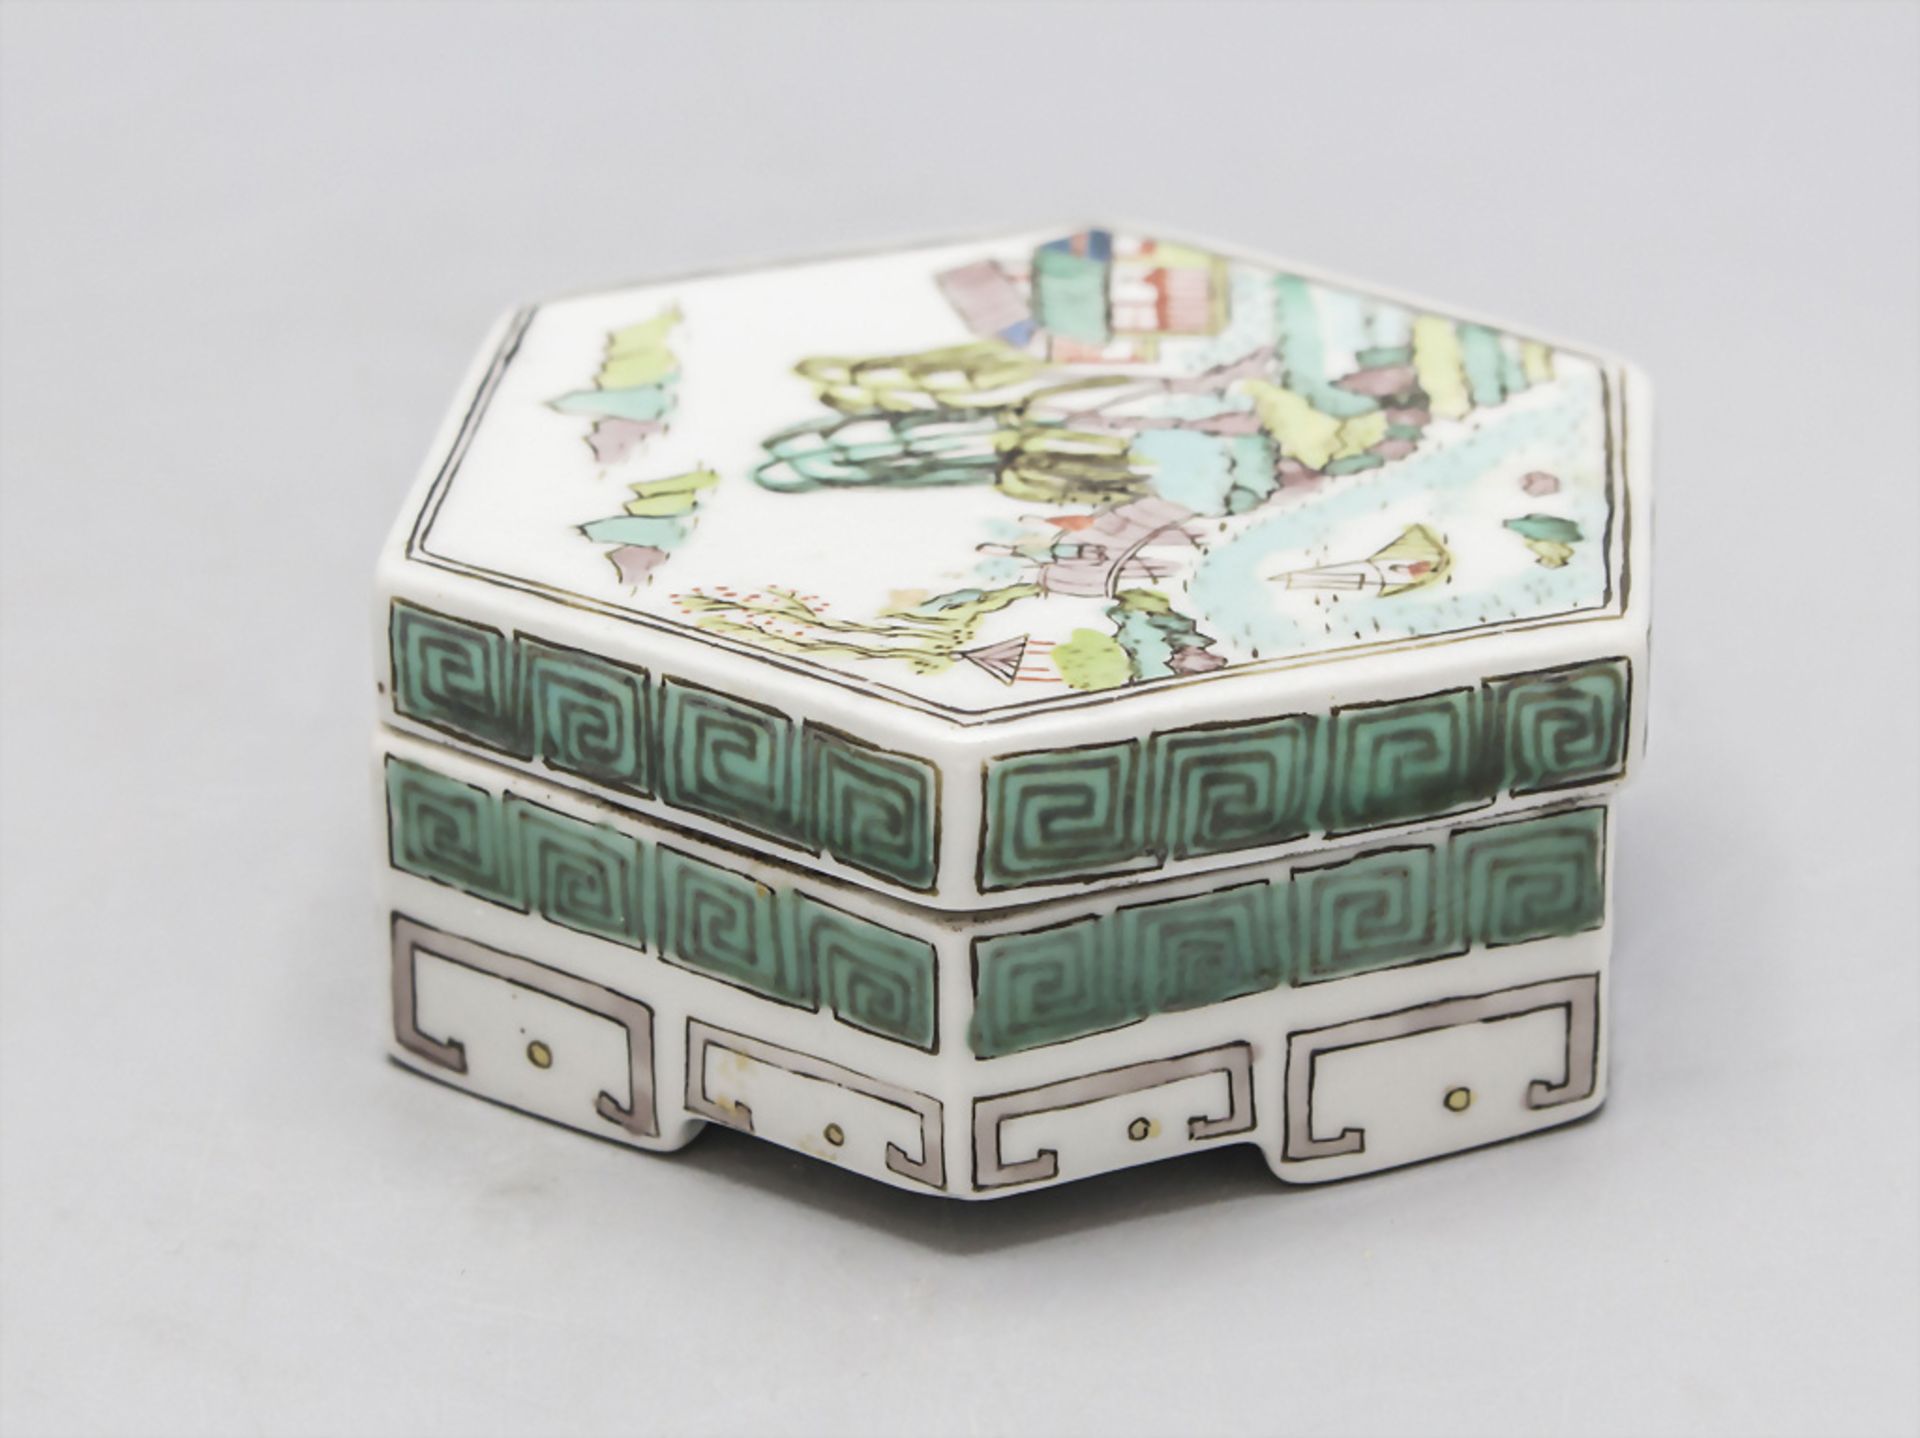 Deckeldose / A lidded porcelain box, China, Qing-Dynastie (1644-1911), 18./19. Jh. - Image 2 of 6